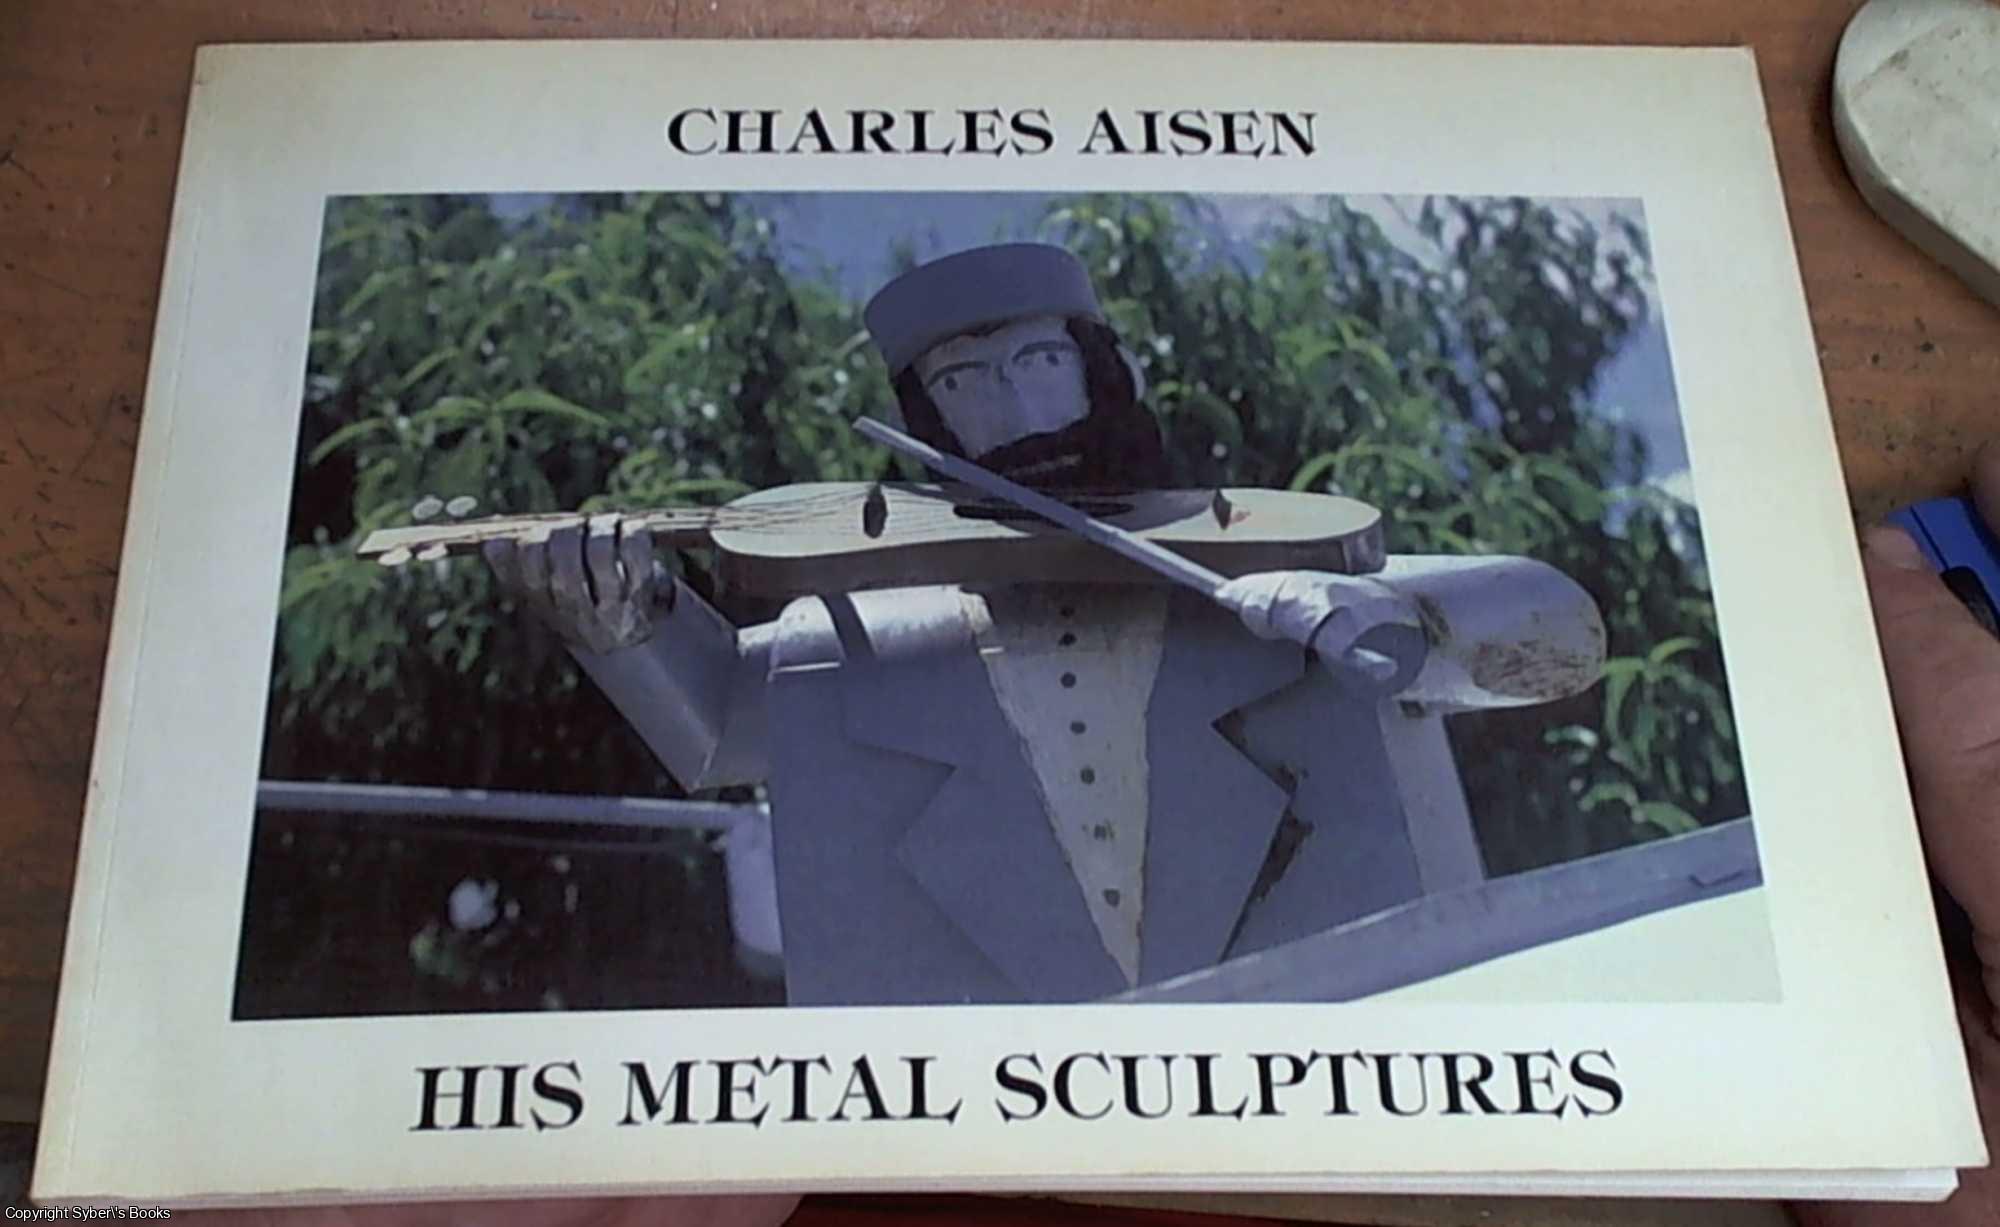 Robe, Stanley -- Editor - Charles Aisen; His Metal Sculptures